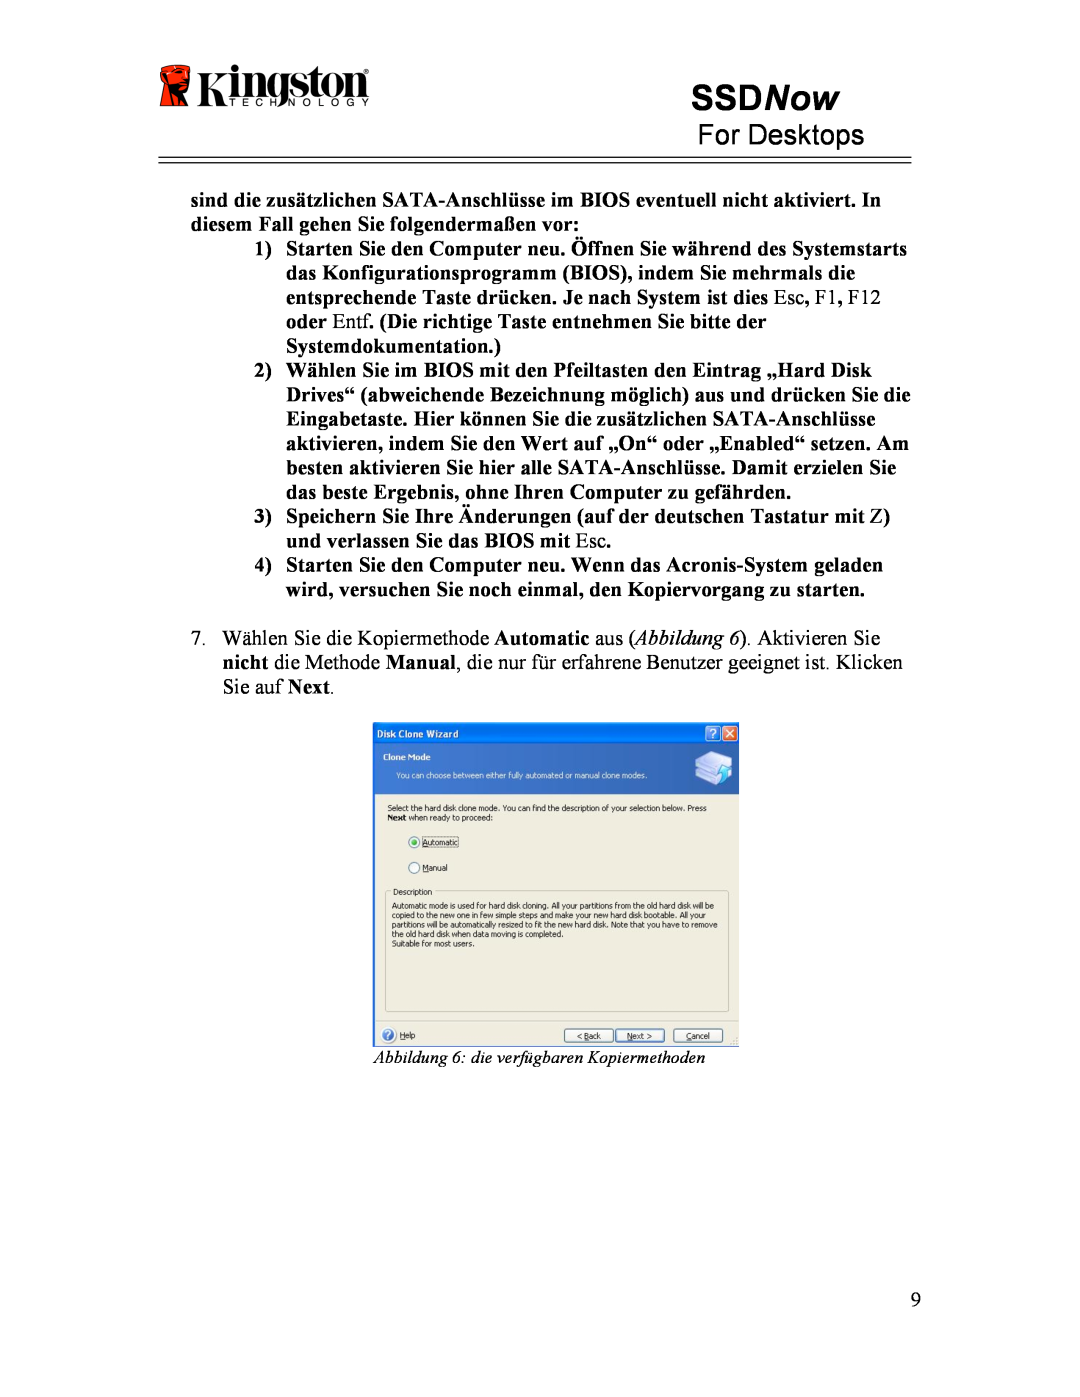 Kingston Technology 07-16-2009 manual SSDNow, For Desktops, Systemdokumentation 